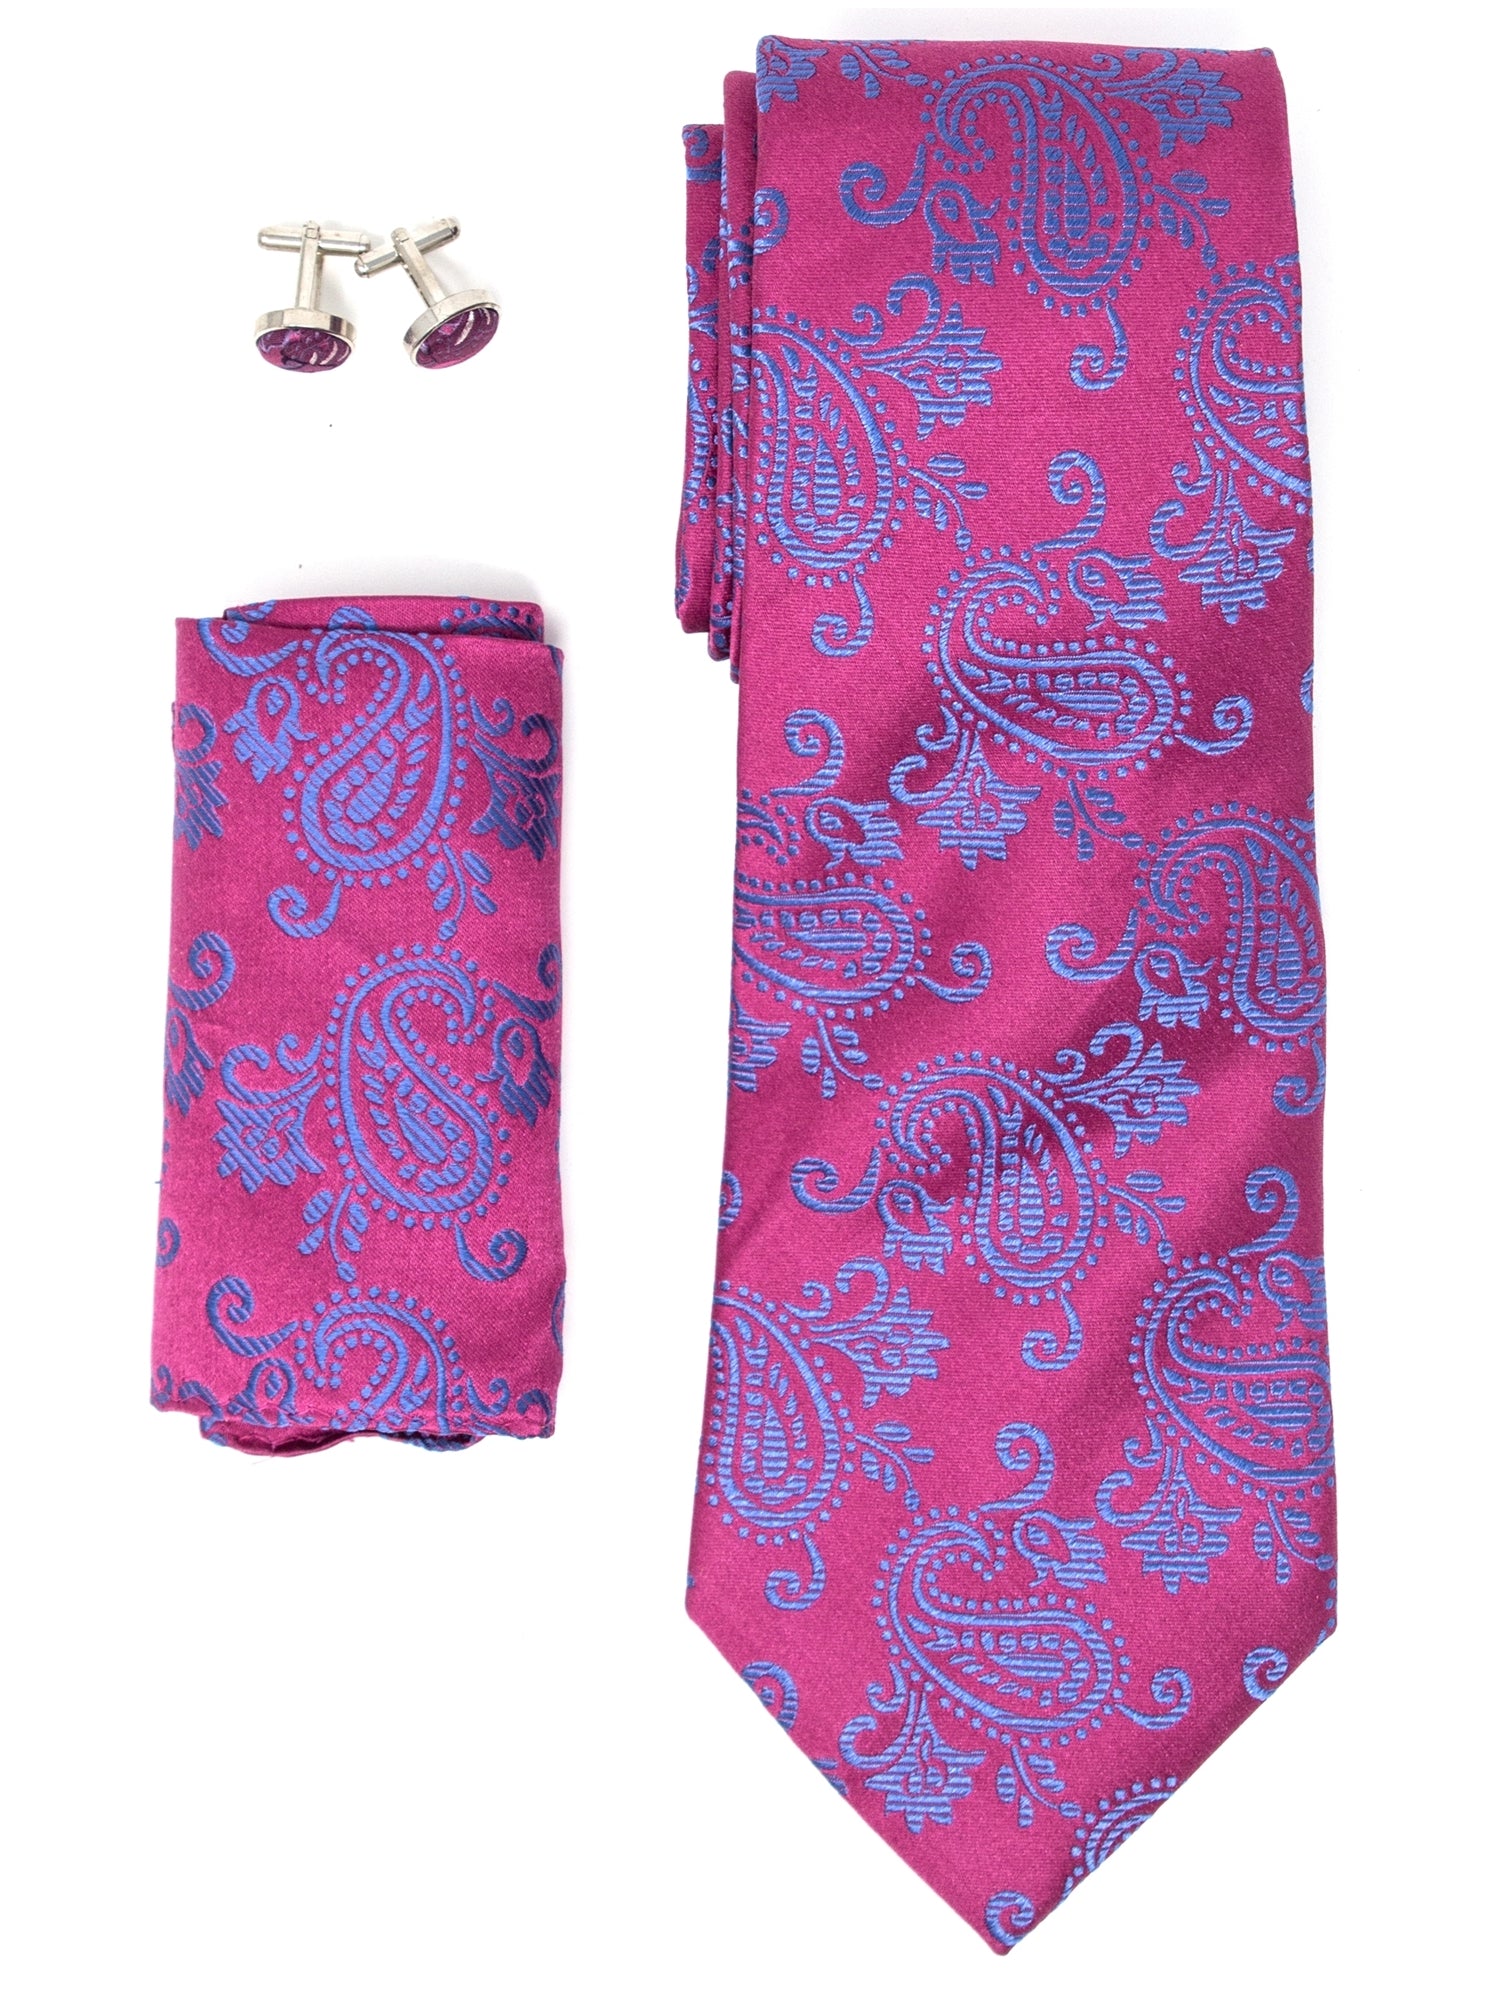 Men's Silk Neck Tie Set Cufflinks & Hanky Collection Neck Tie TheDapperTie Fuchsia And Royal Blue Paisley Regular 